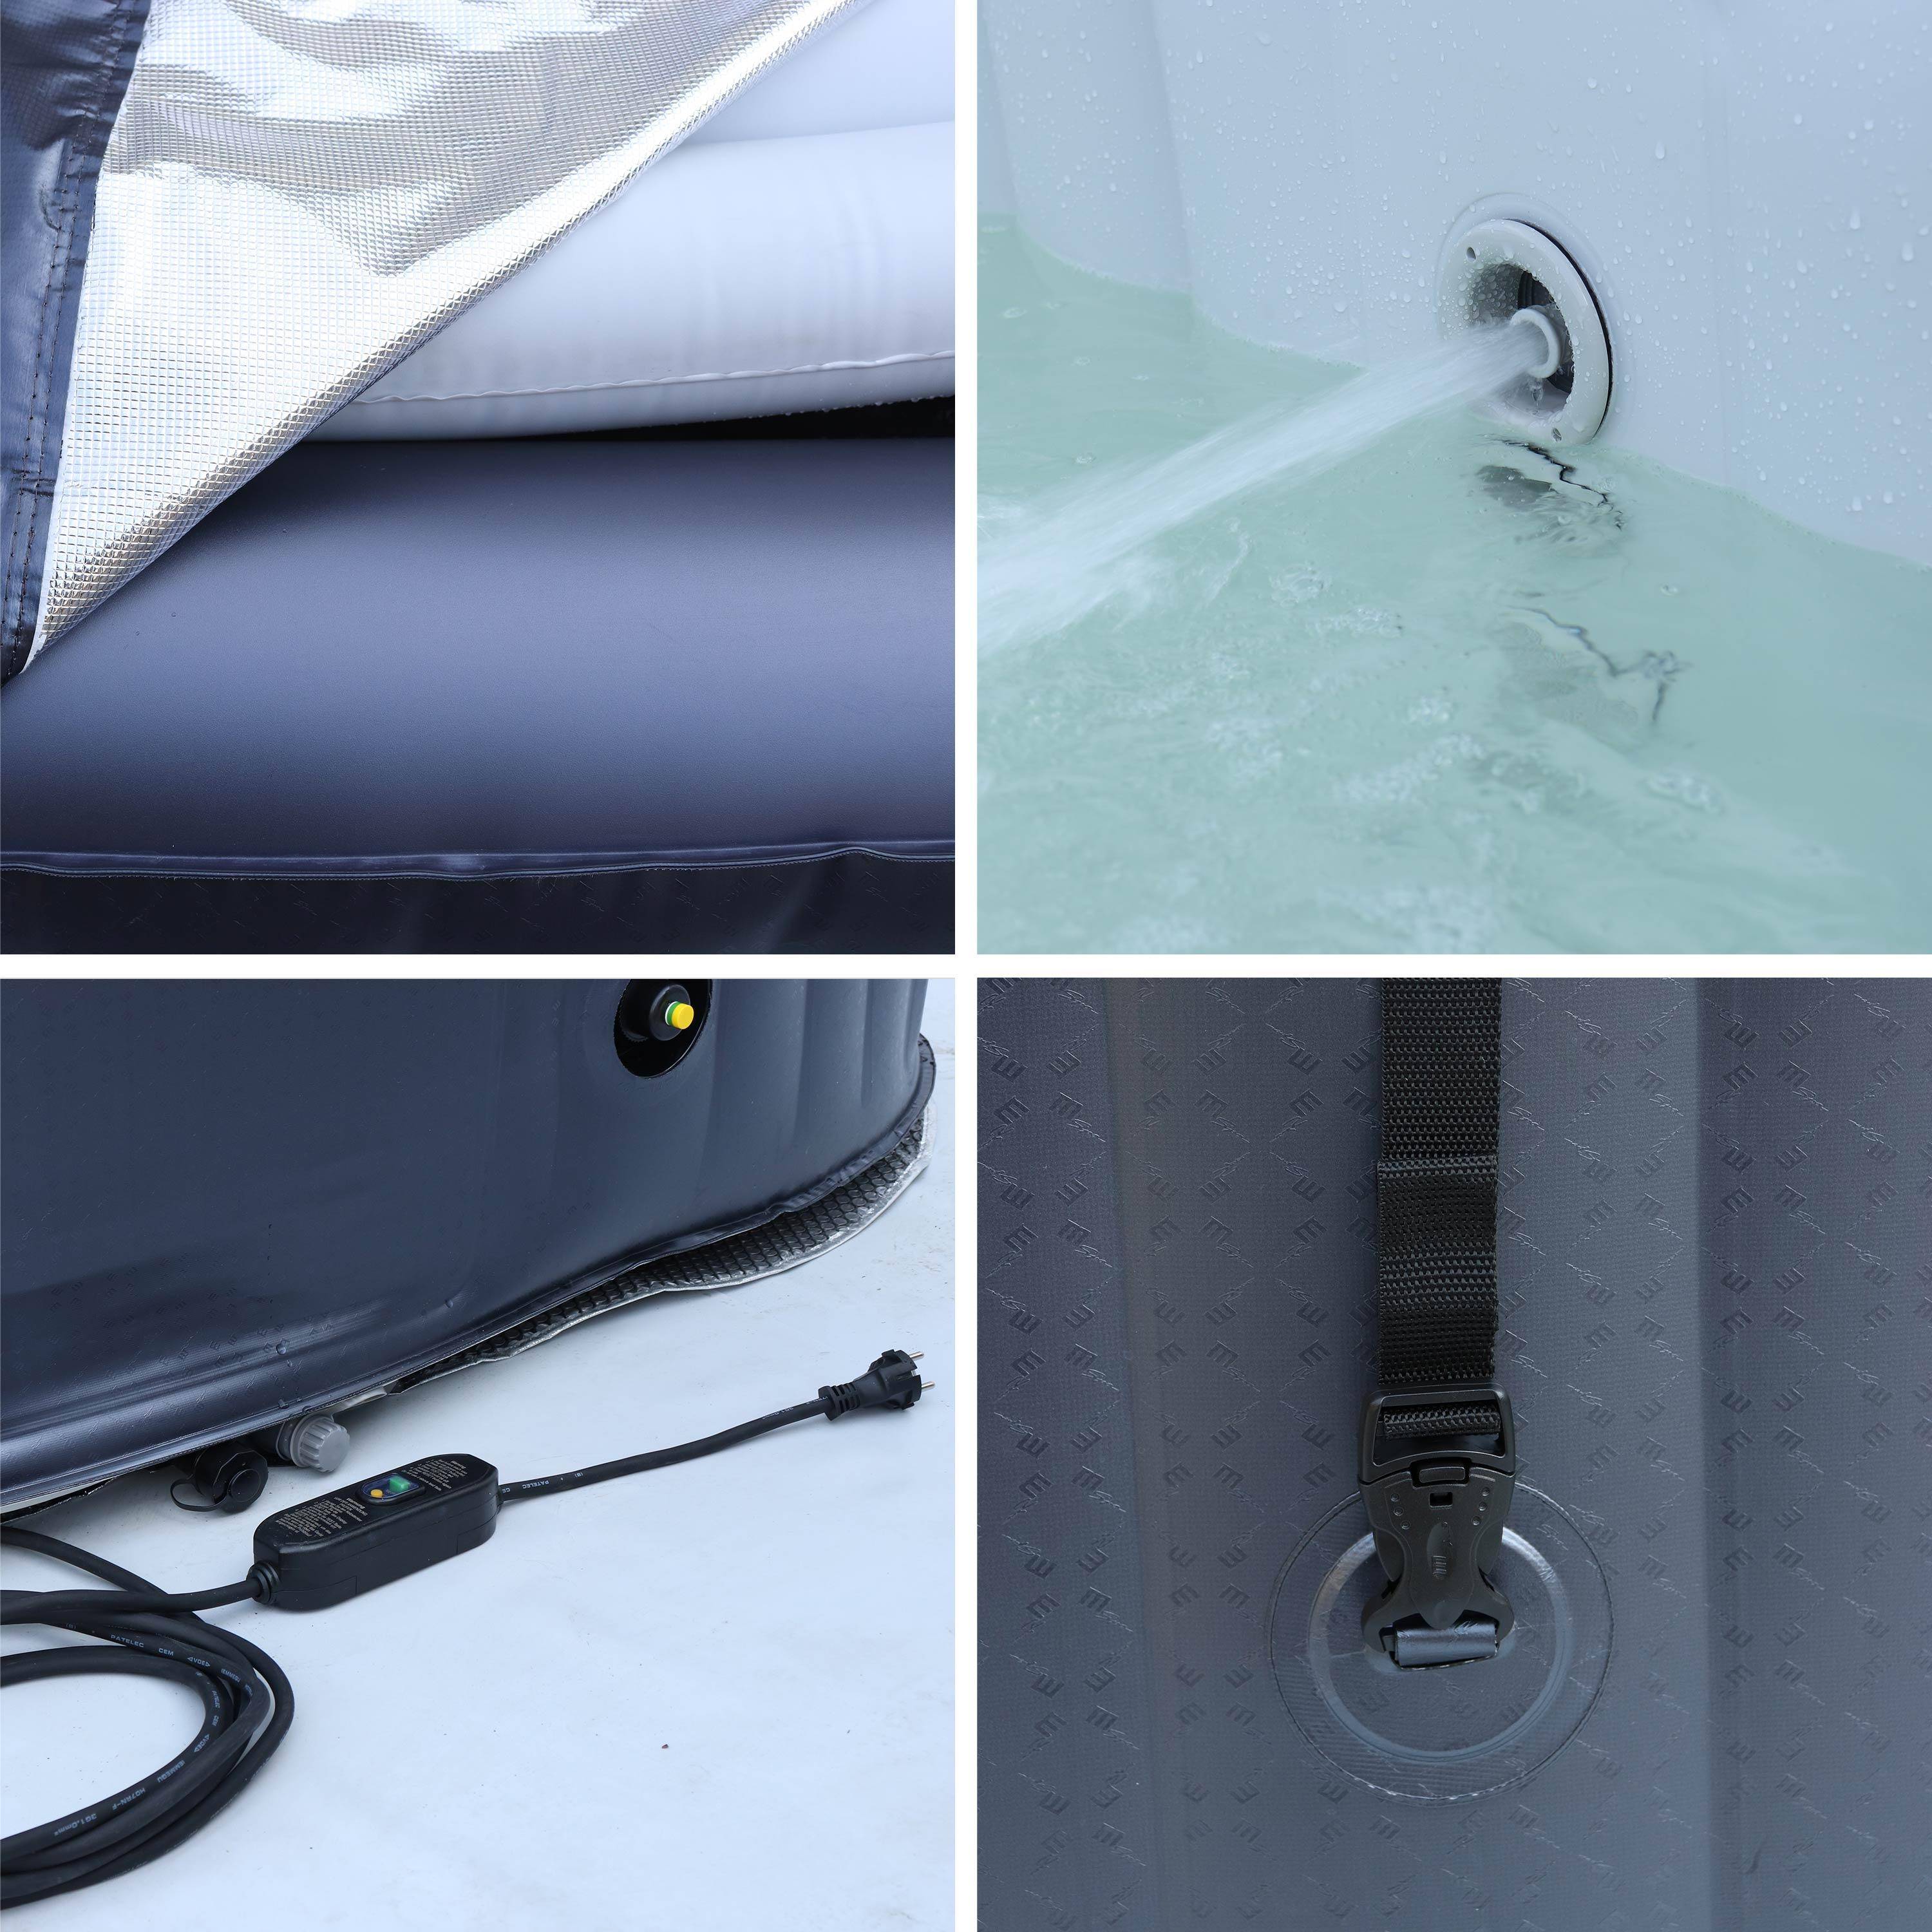  6-person premium square inflatable hot tub MSpa - 185cm, PVC, pump, heating, self-inflating, massage hydrojets, 2 filter cartridges, cover - Otium 6 - Blue,sweeek,Photo8